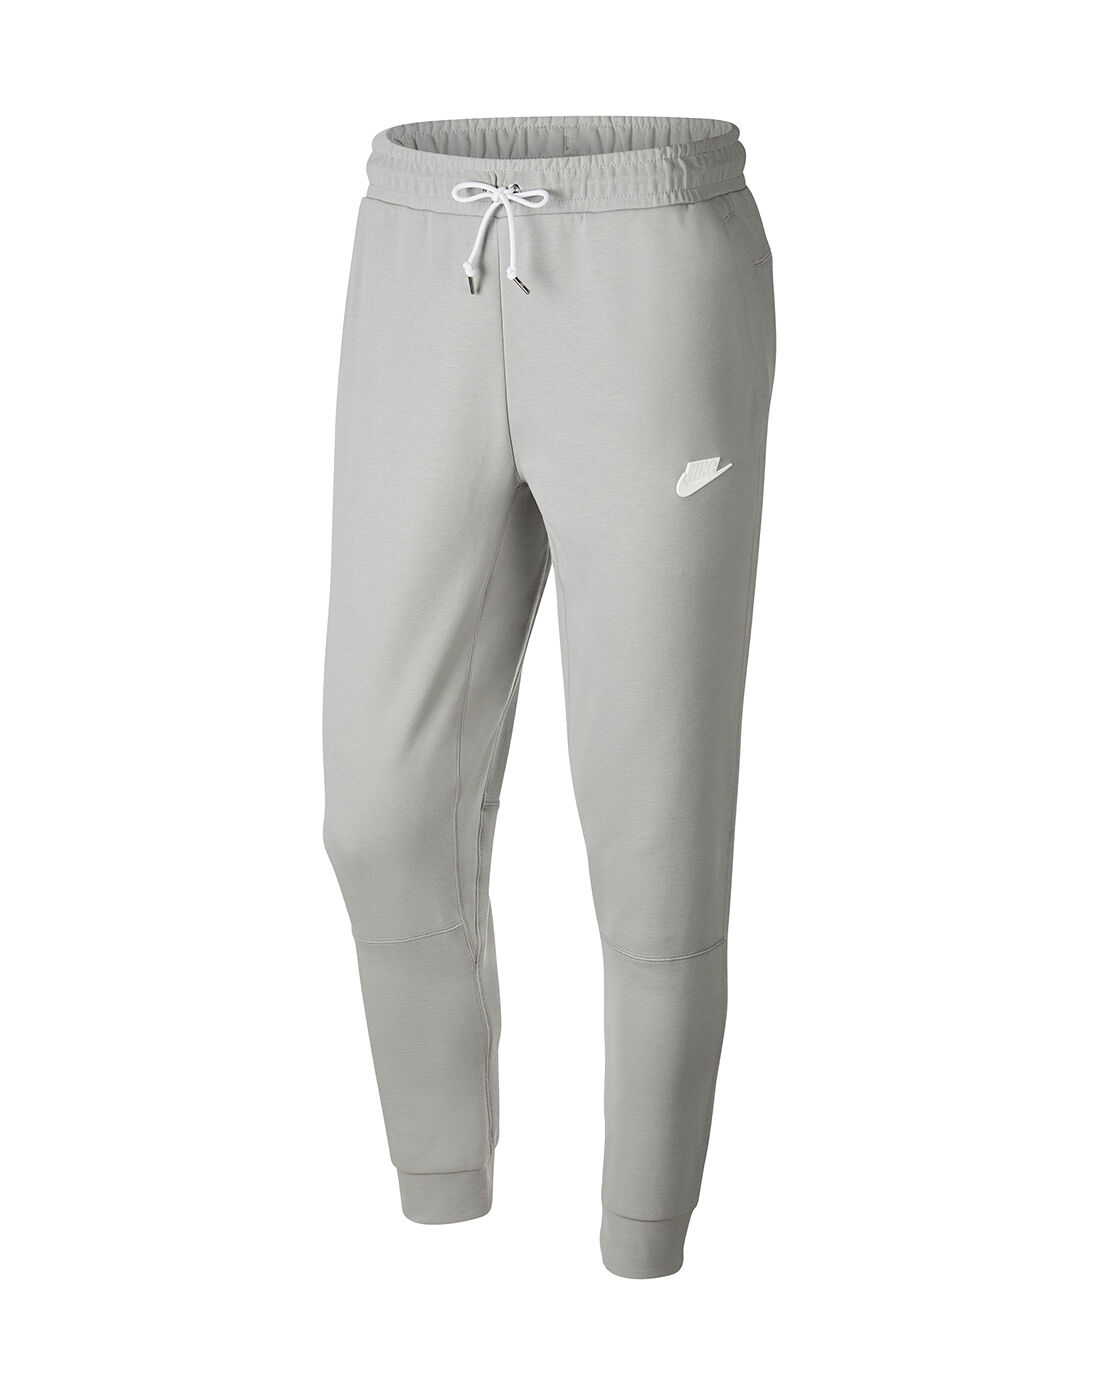 nike sportswear tracksuit grey